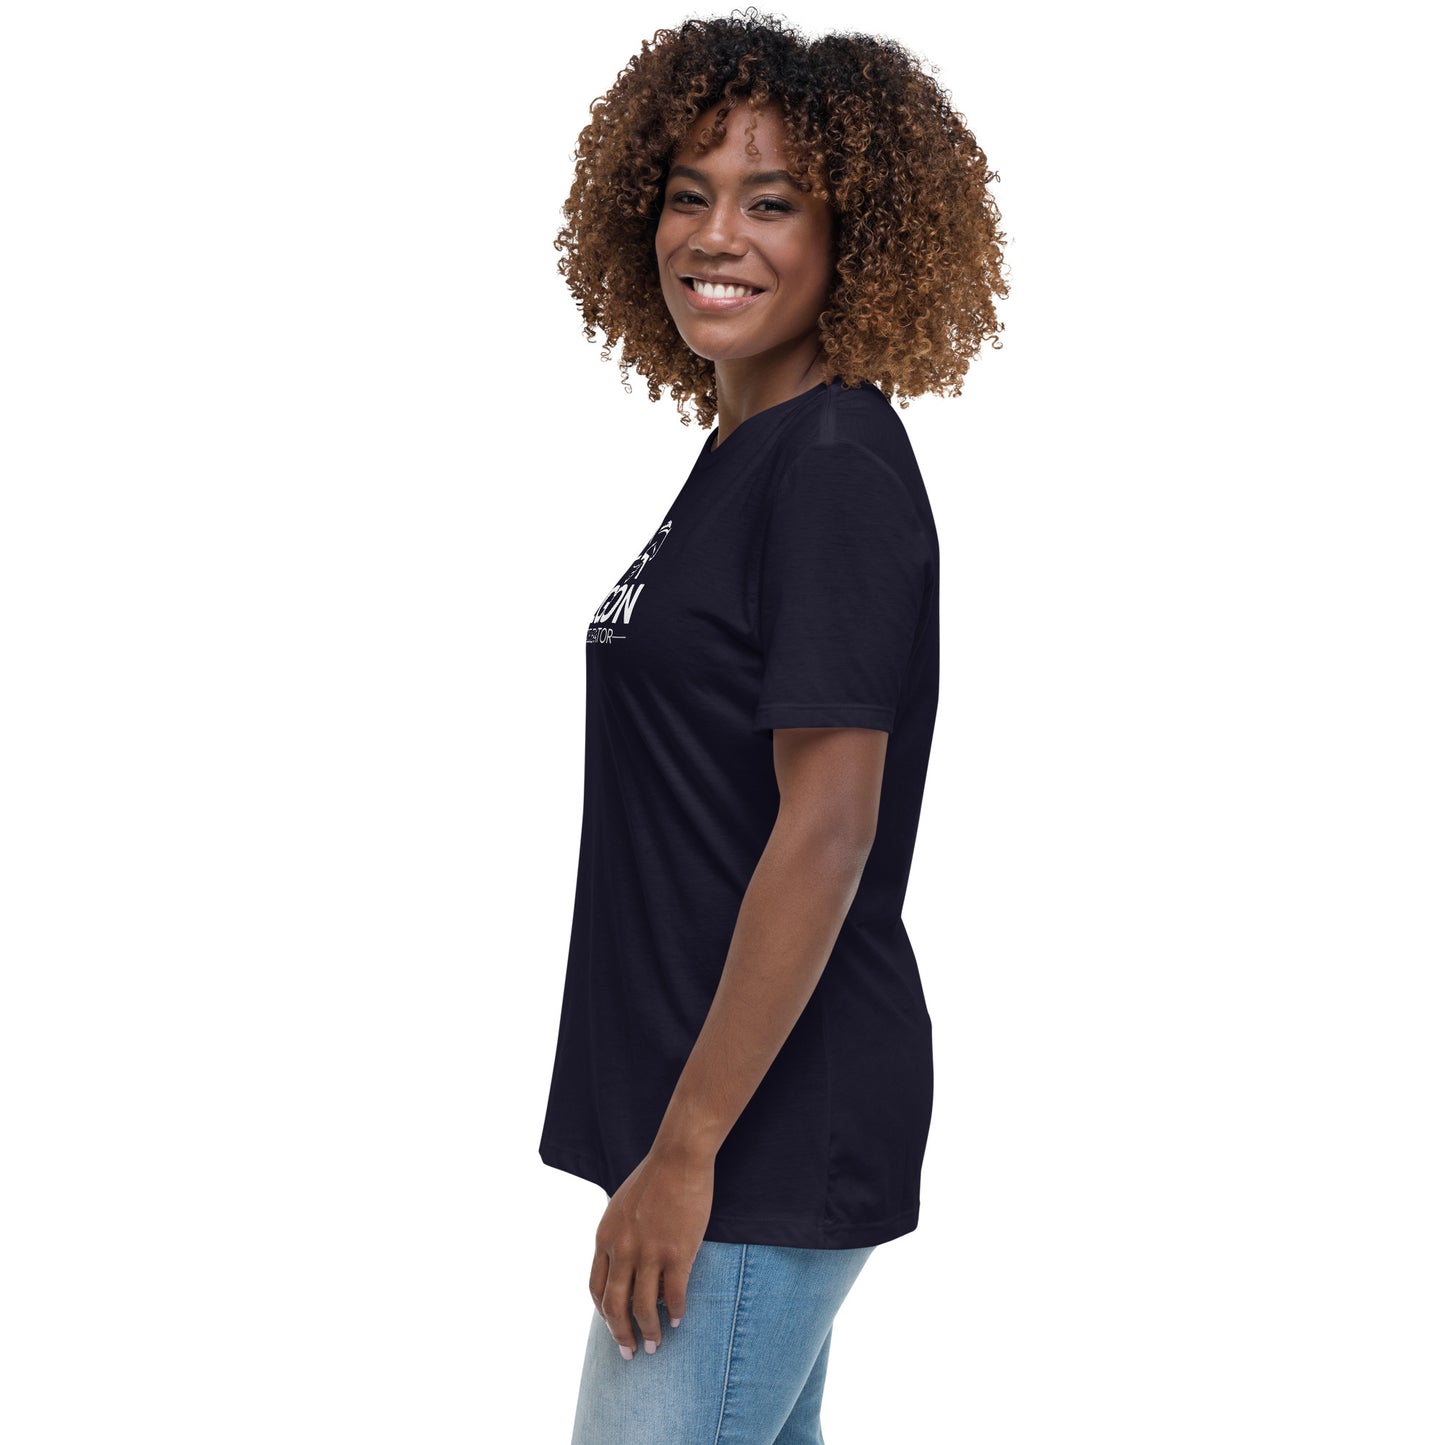 Women's Dark Color T-Shirt